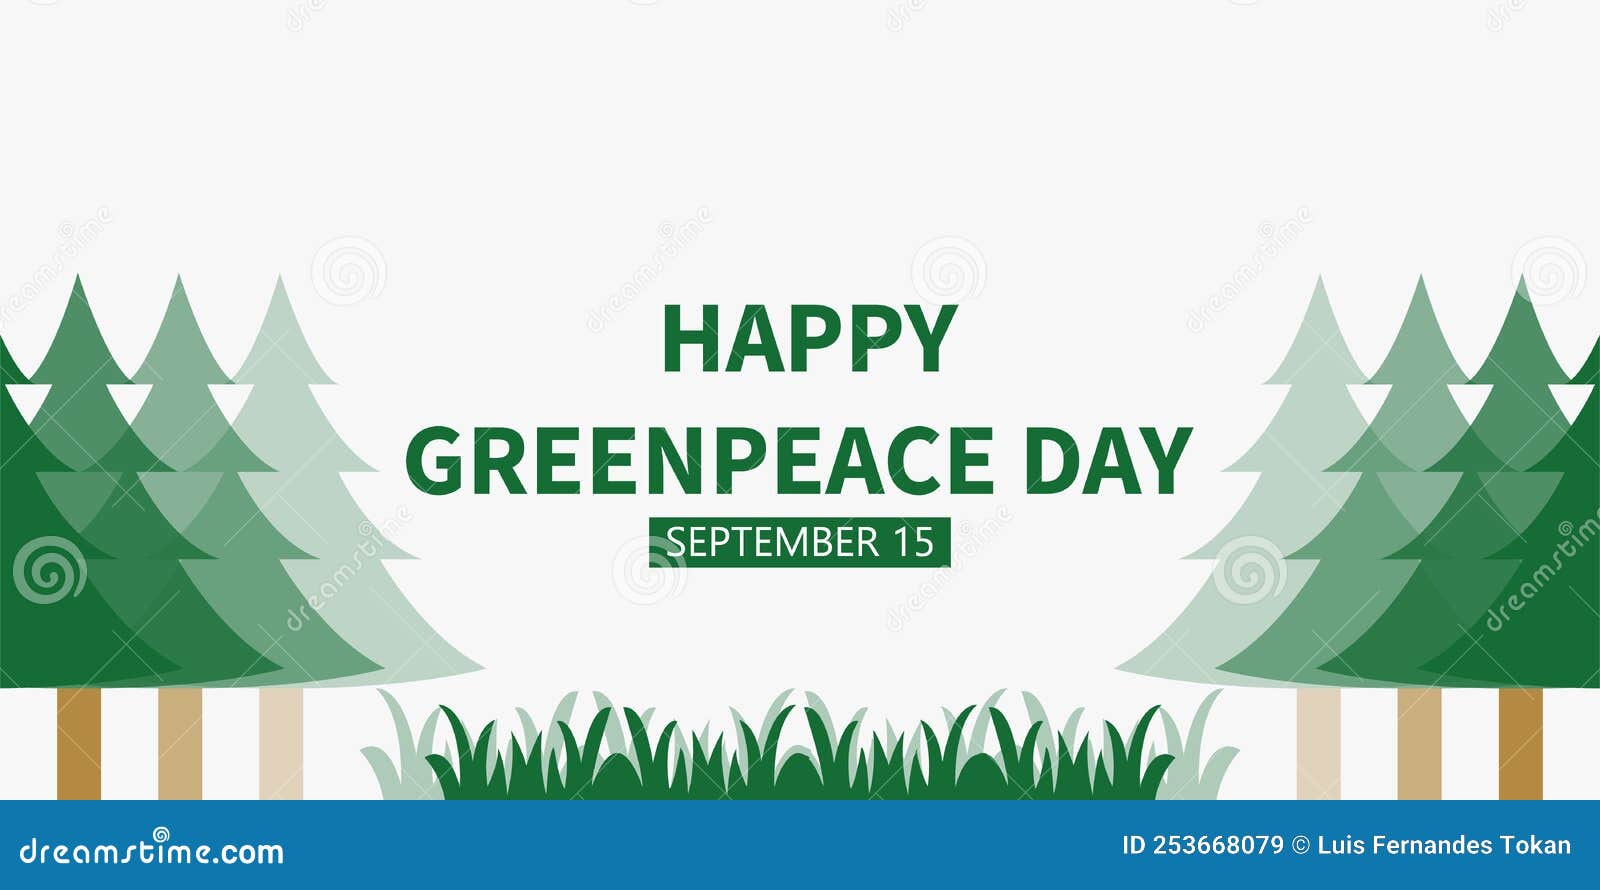 happy greenpeace day banner, september 15